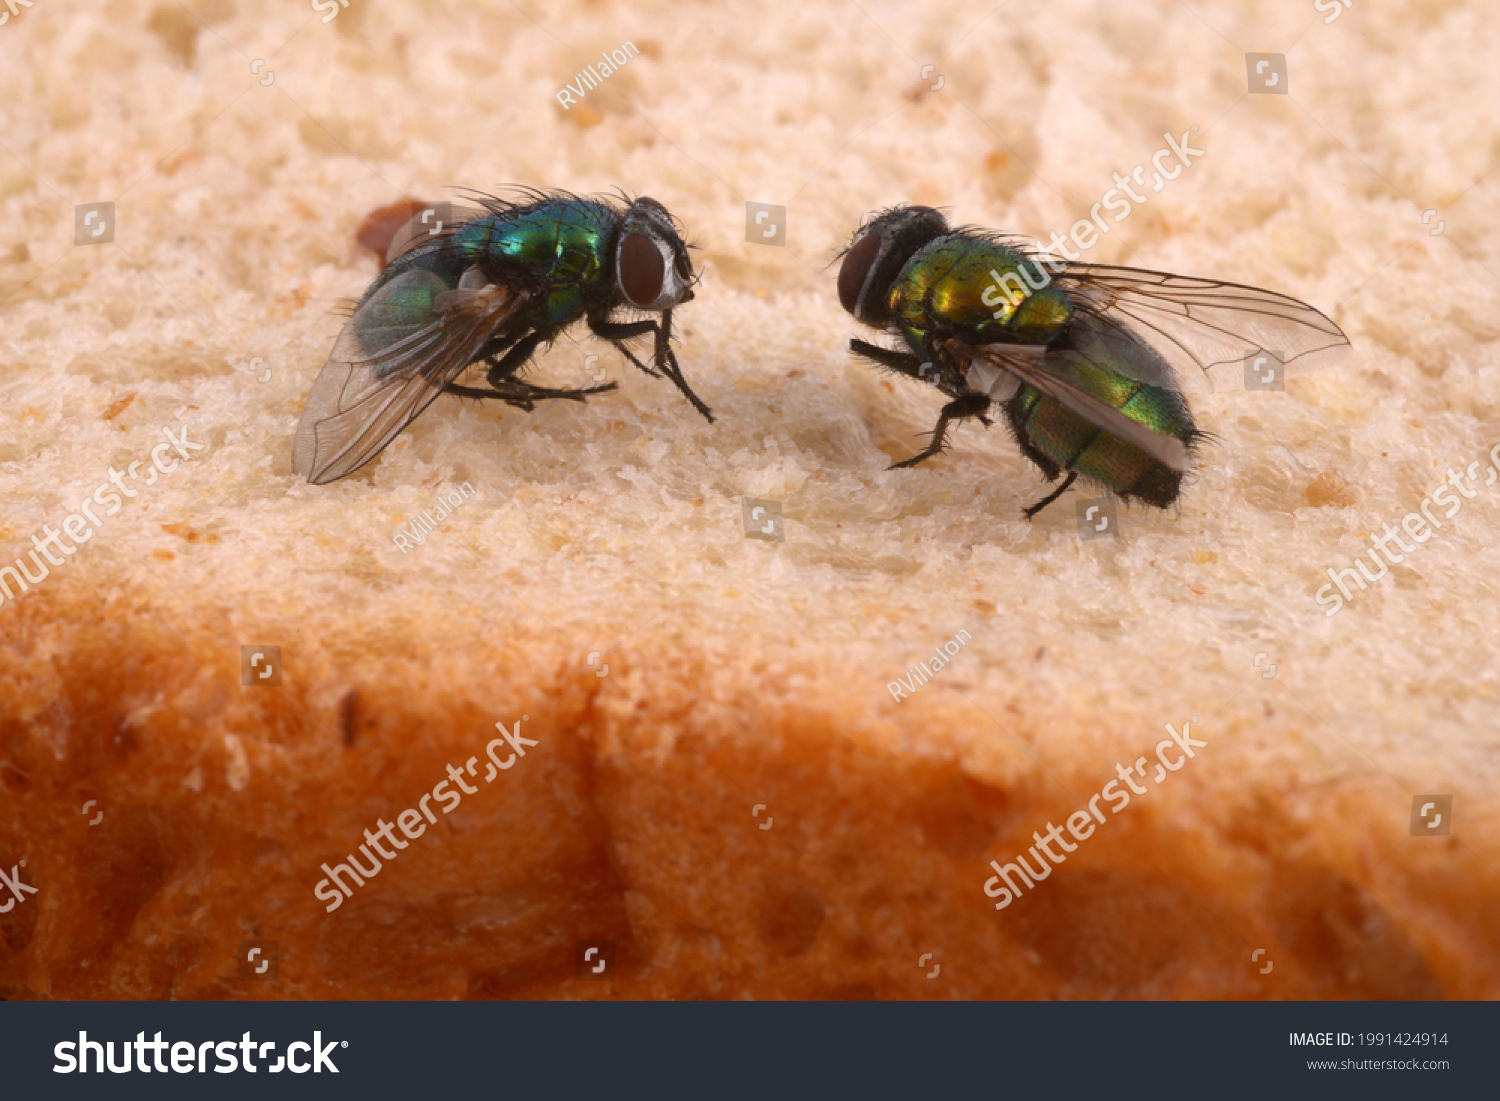 Close-up of flies on sandwich bread  #1991424914